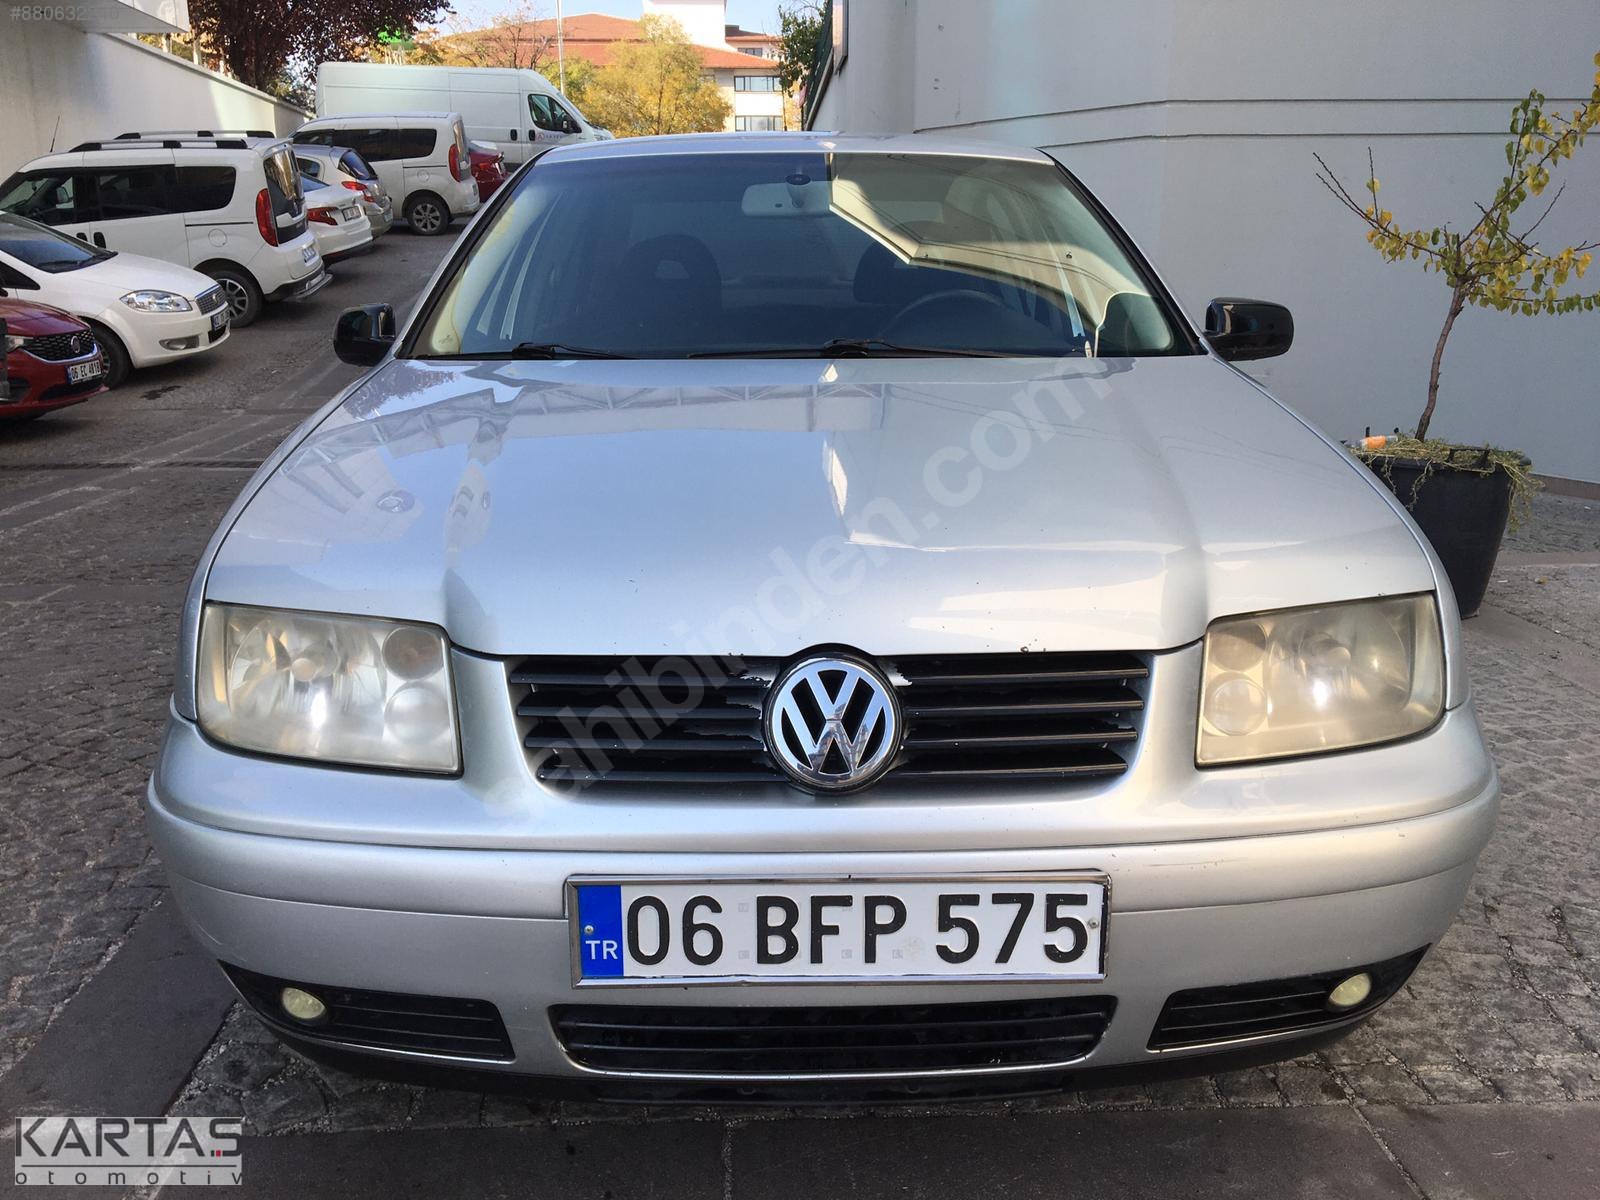 Volkswagen / Bora / 1.6 / Comfortline / FIAT BAYİSİ KARTAŞ